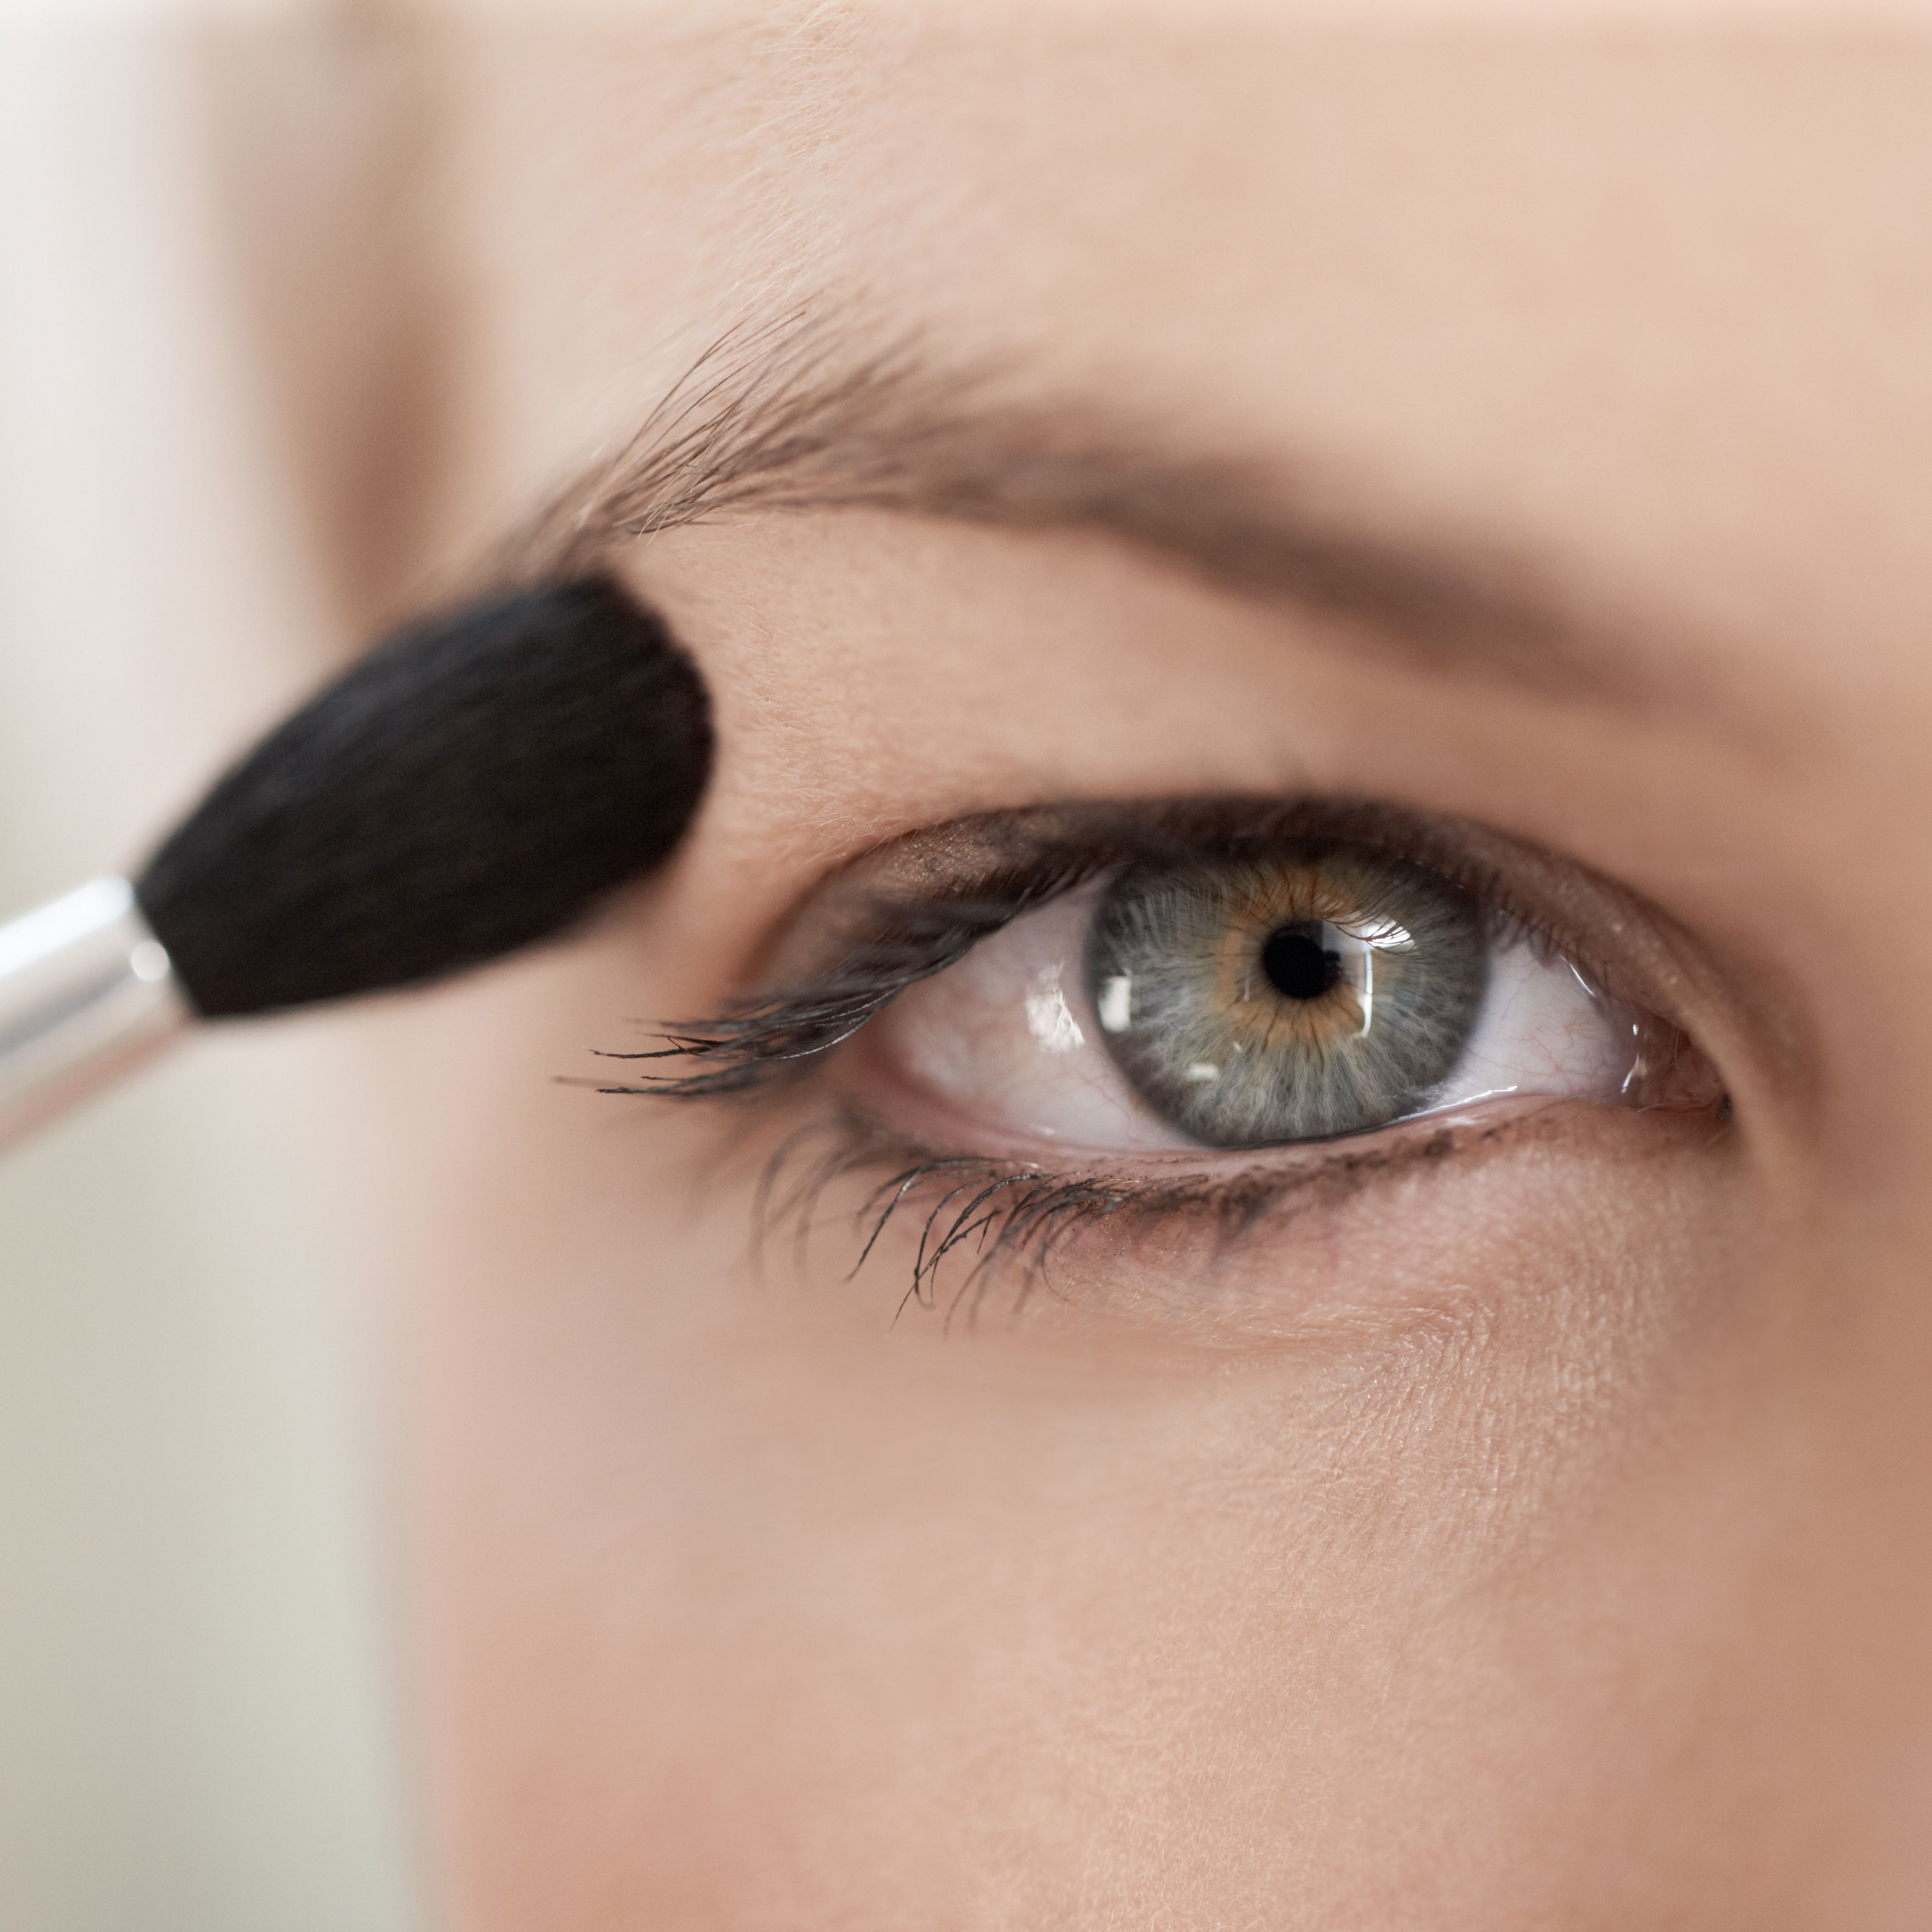 Eye Makeup Images Makeup Tricks For Hooded Eyes Hooded Eyes Makeup Tips And Tricks